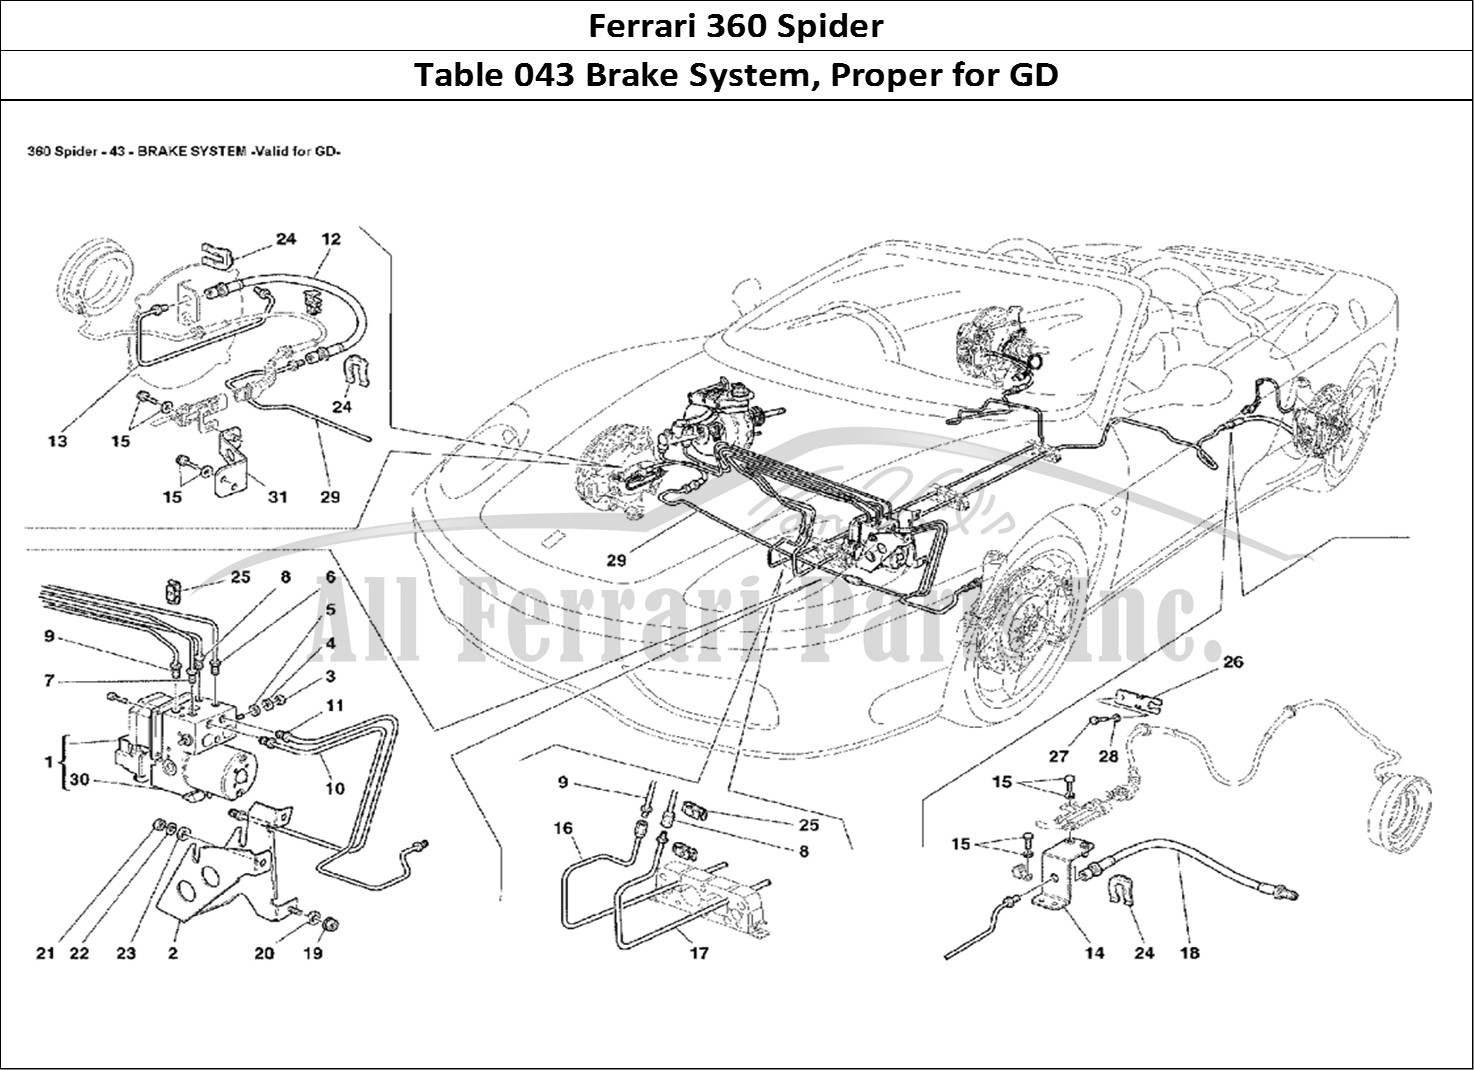 Ferrari Parts Ferrari 360 Spider Page 043 Brake System - Valid for